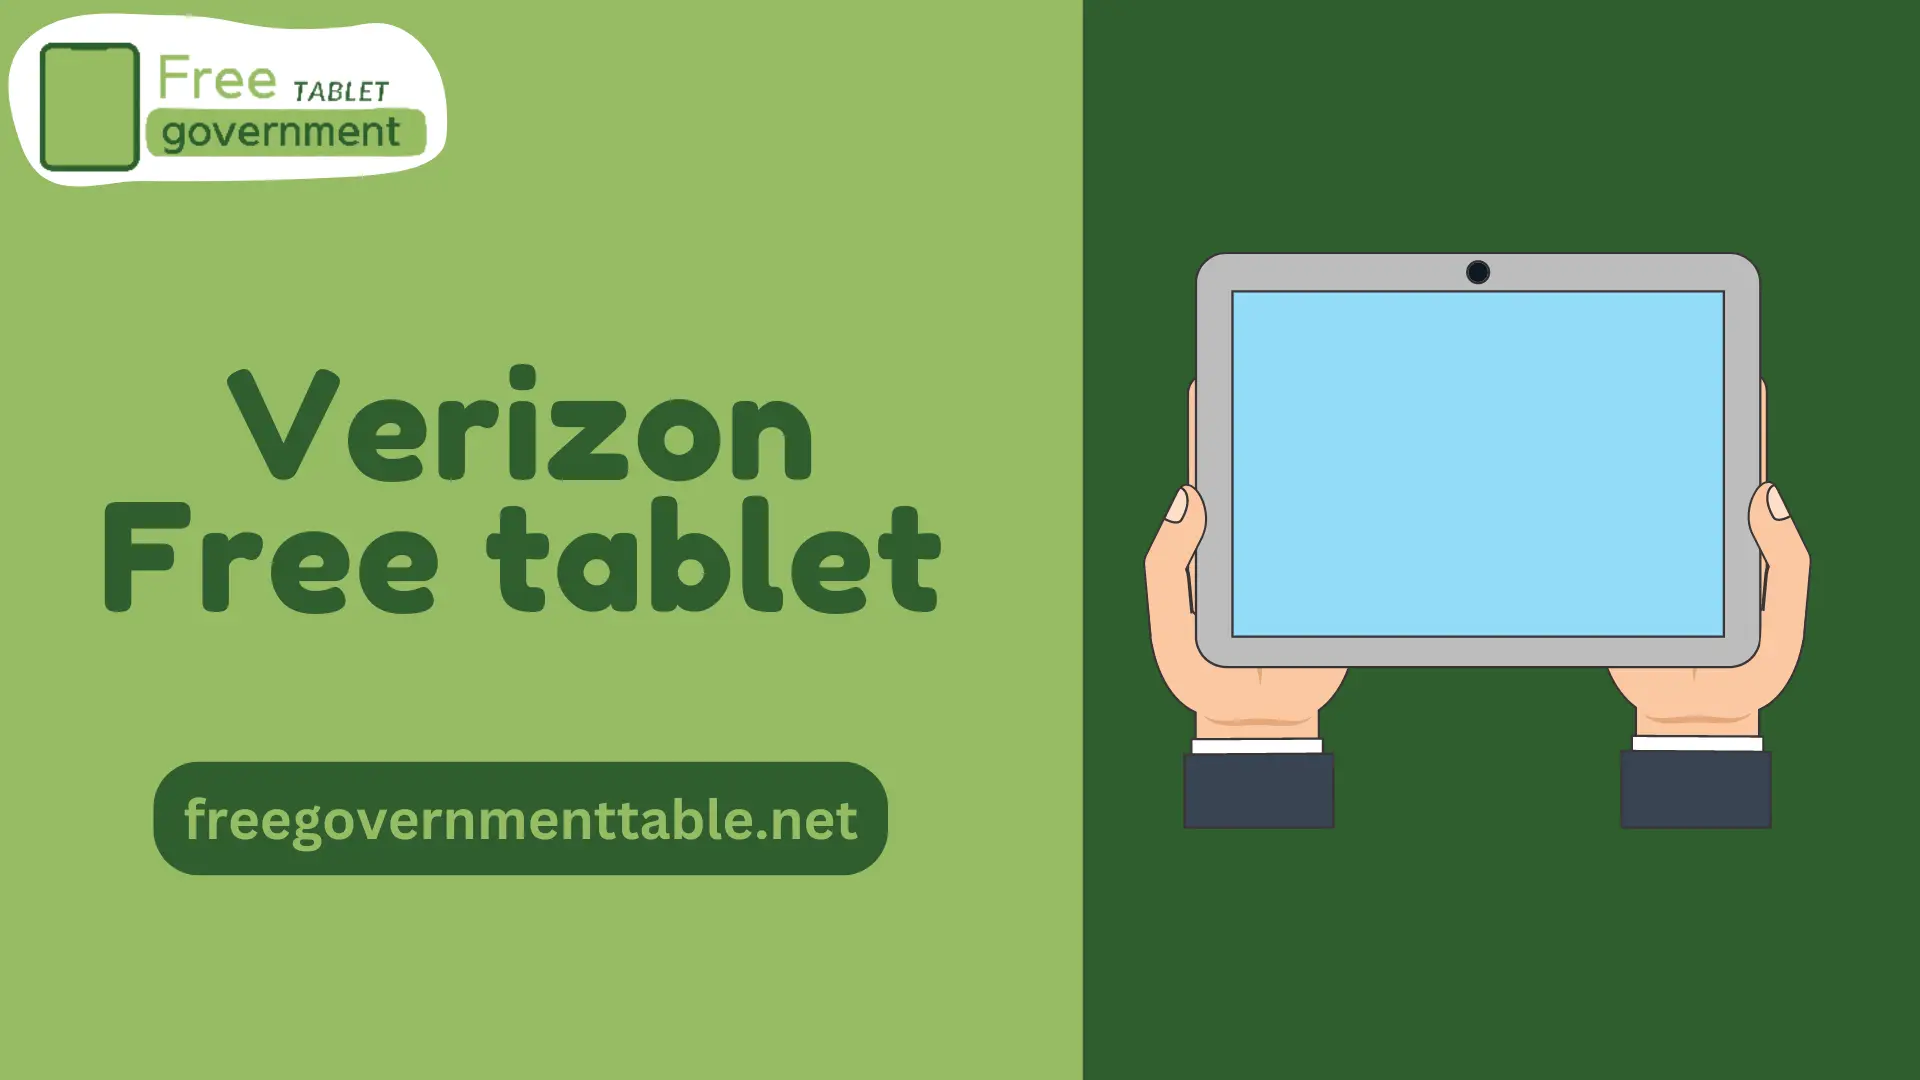 Verizon Free tablet